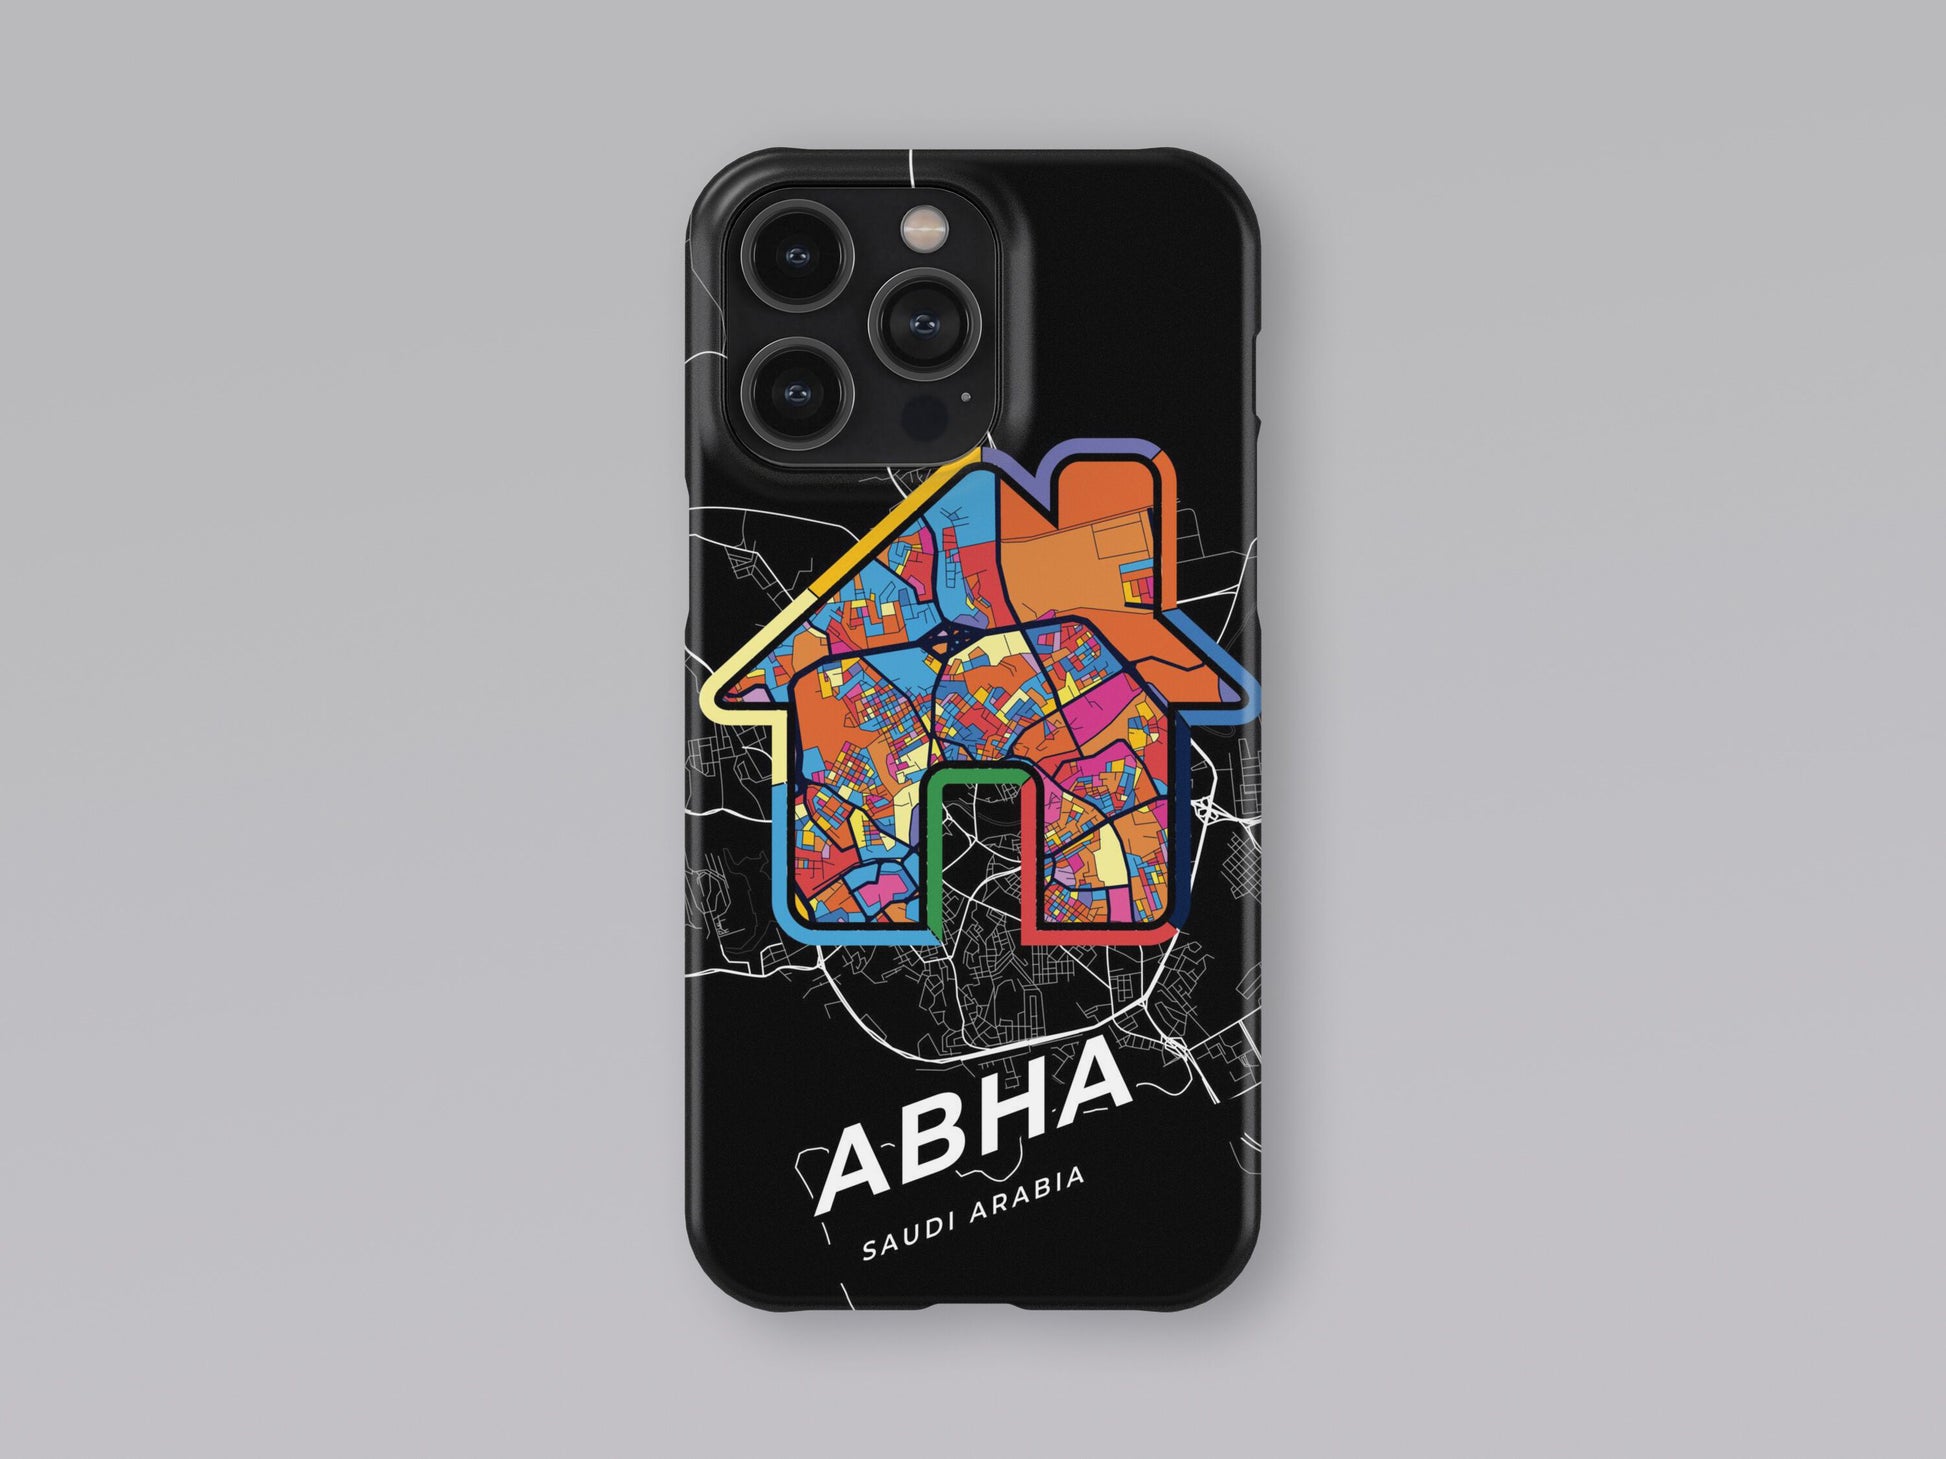 Abha Saudi Arabia slim phone case with colorful icon. Birthday, wedding or housewarming gift. Couple match cases. 3